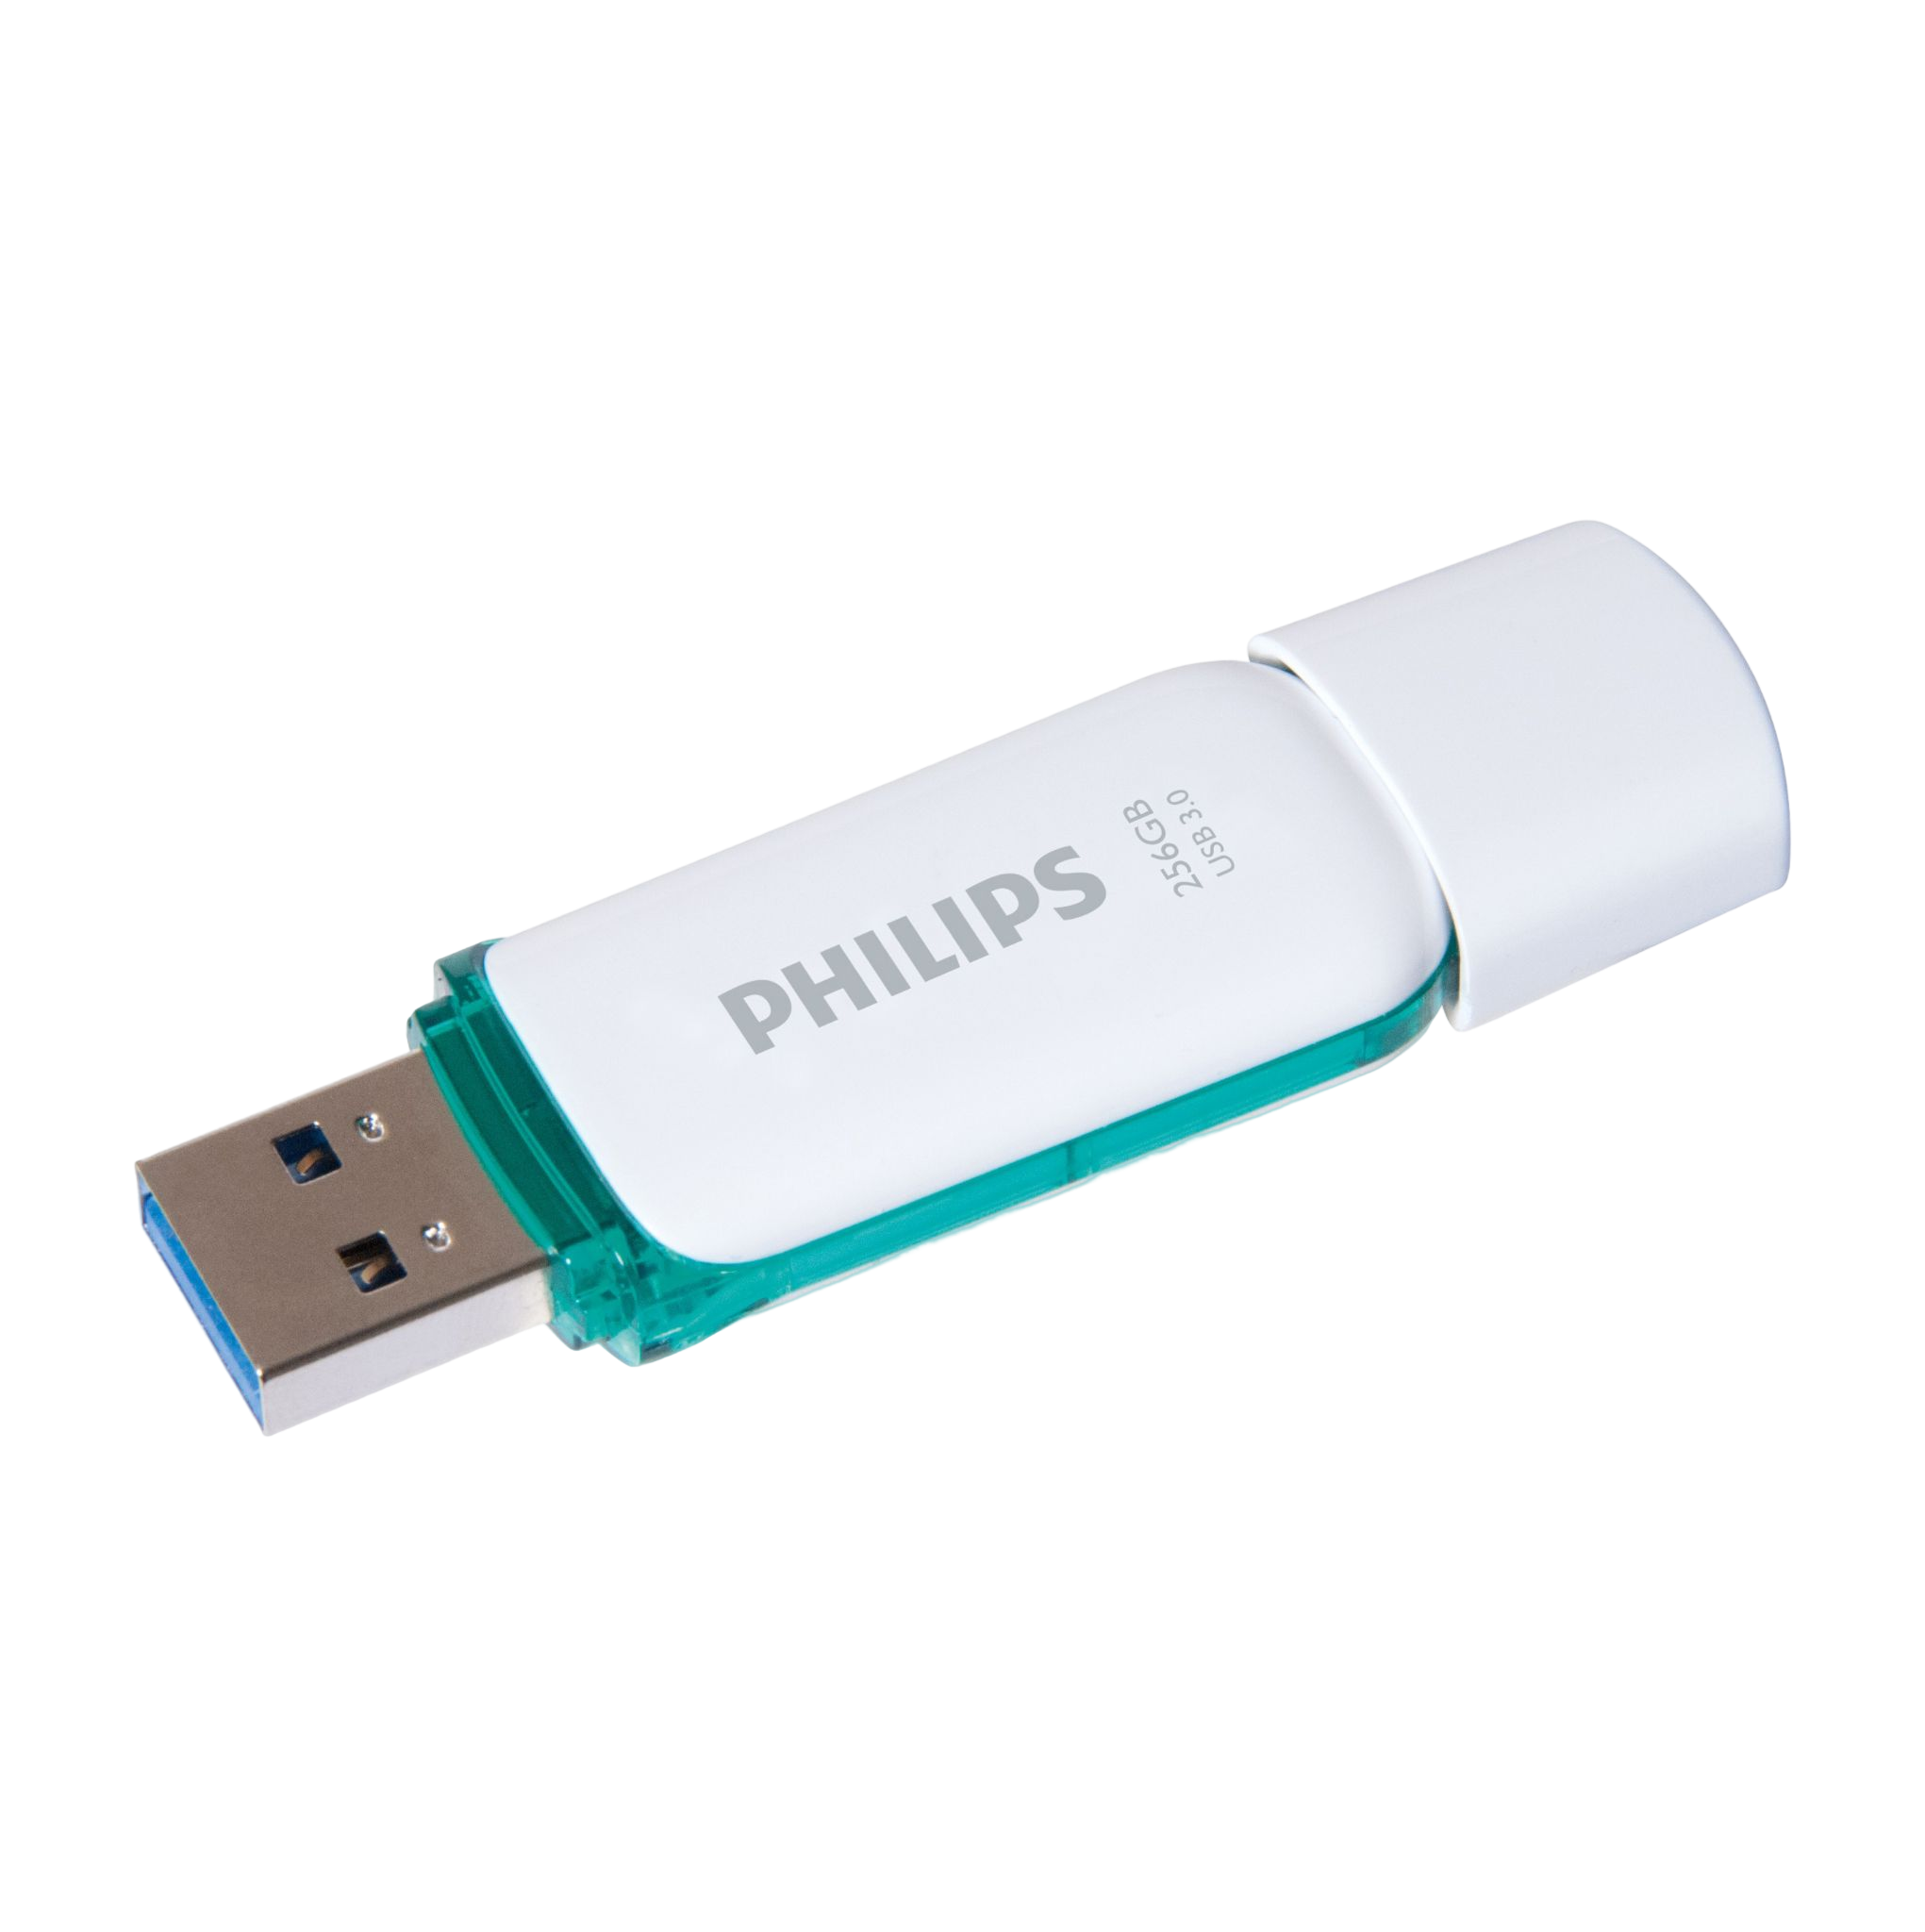 PHILIPS Snow Edition 100 GB) MB/s Spring Green®, USB-Stick (Weiß, 256